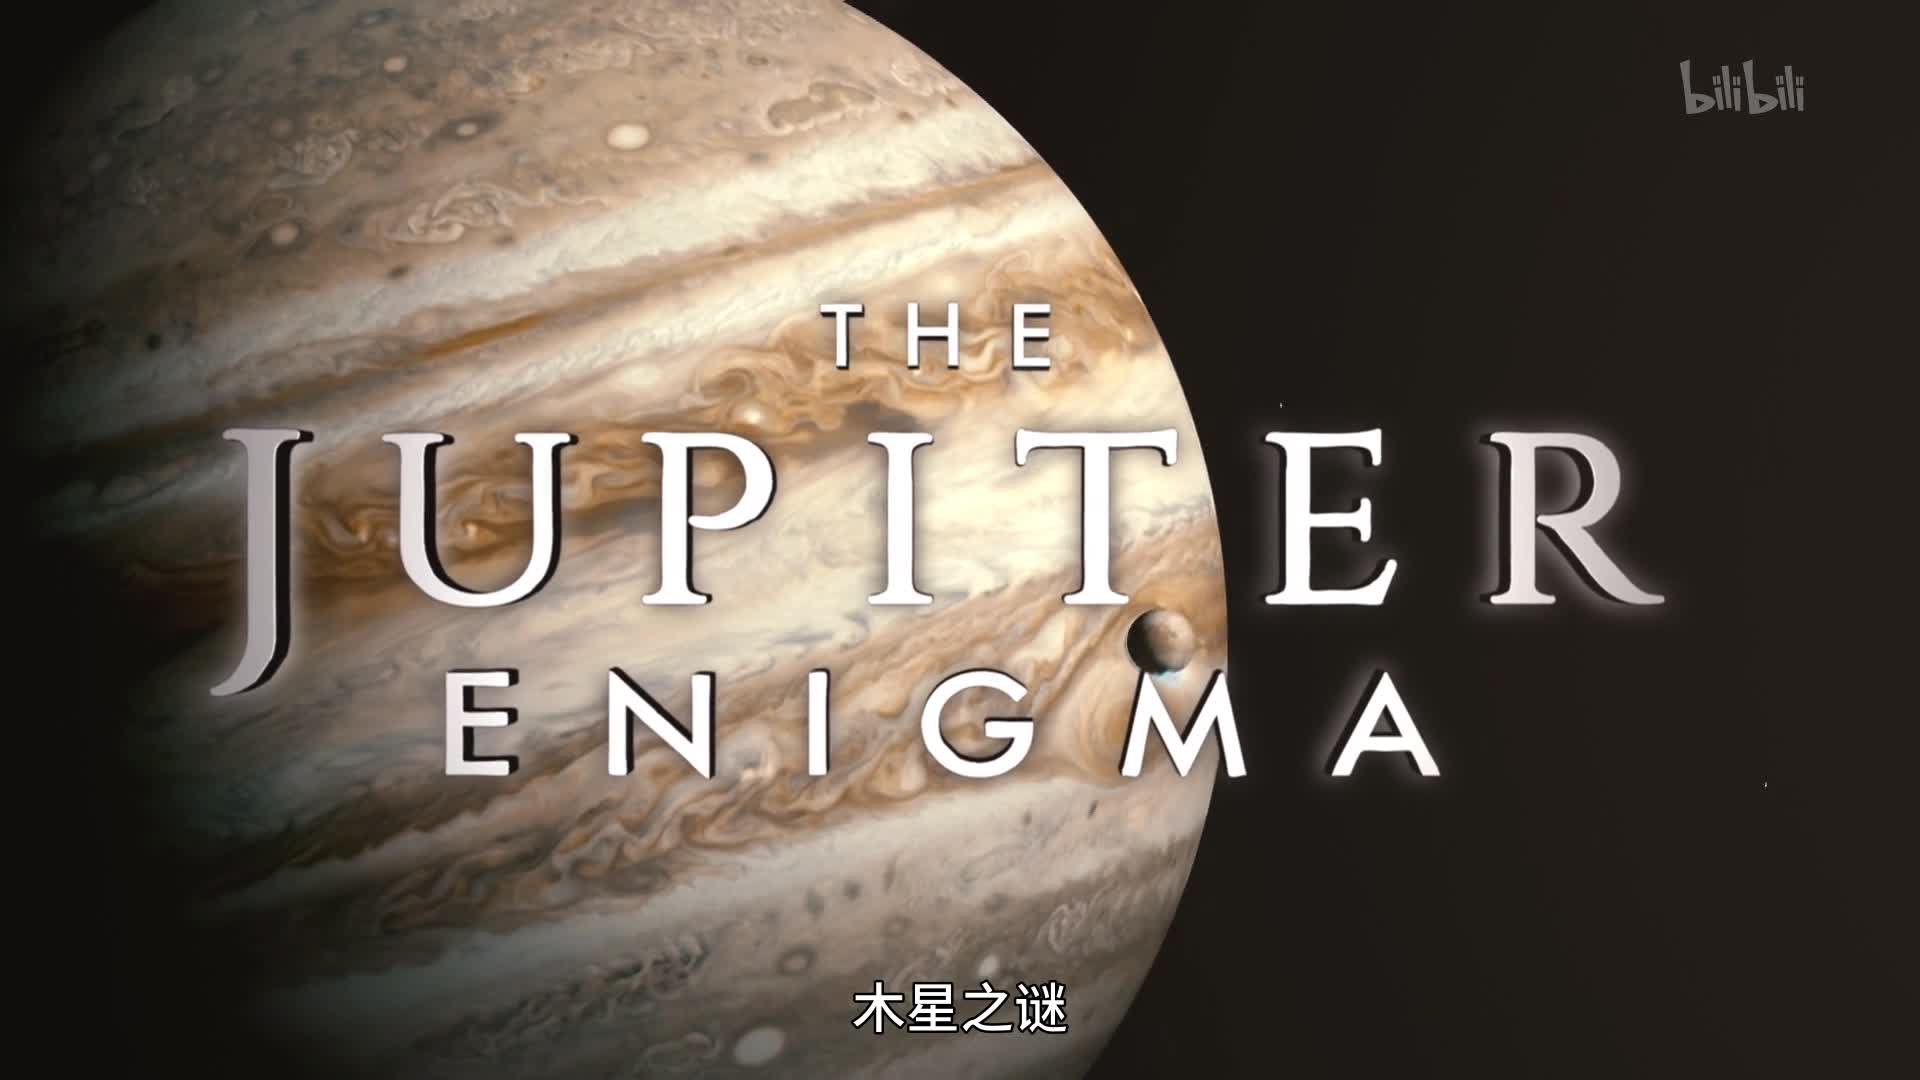 【纪录片】木星之谜 The Jupiter Enigma